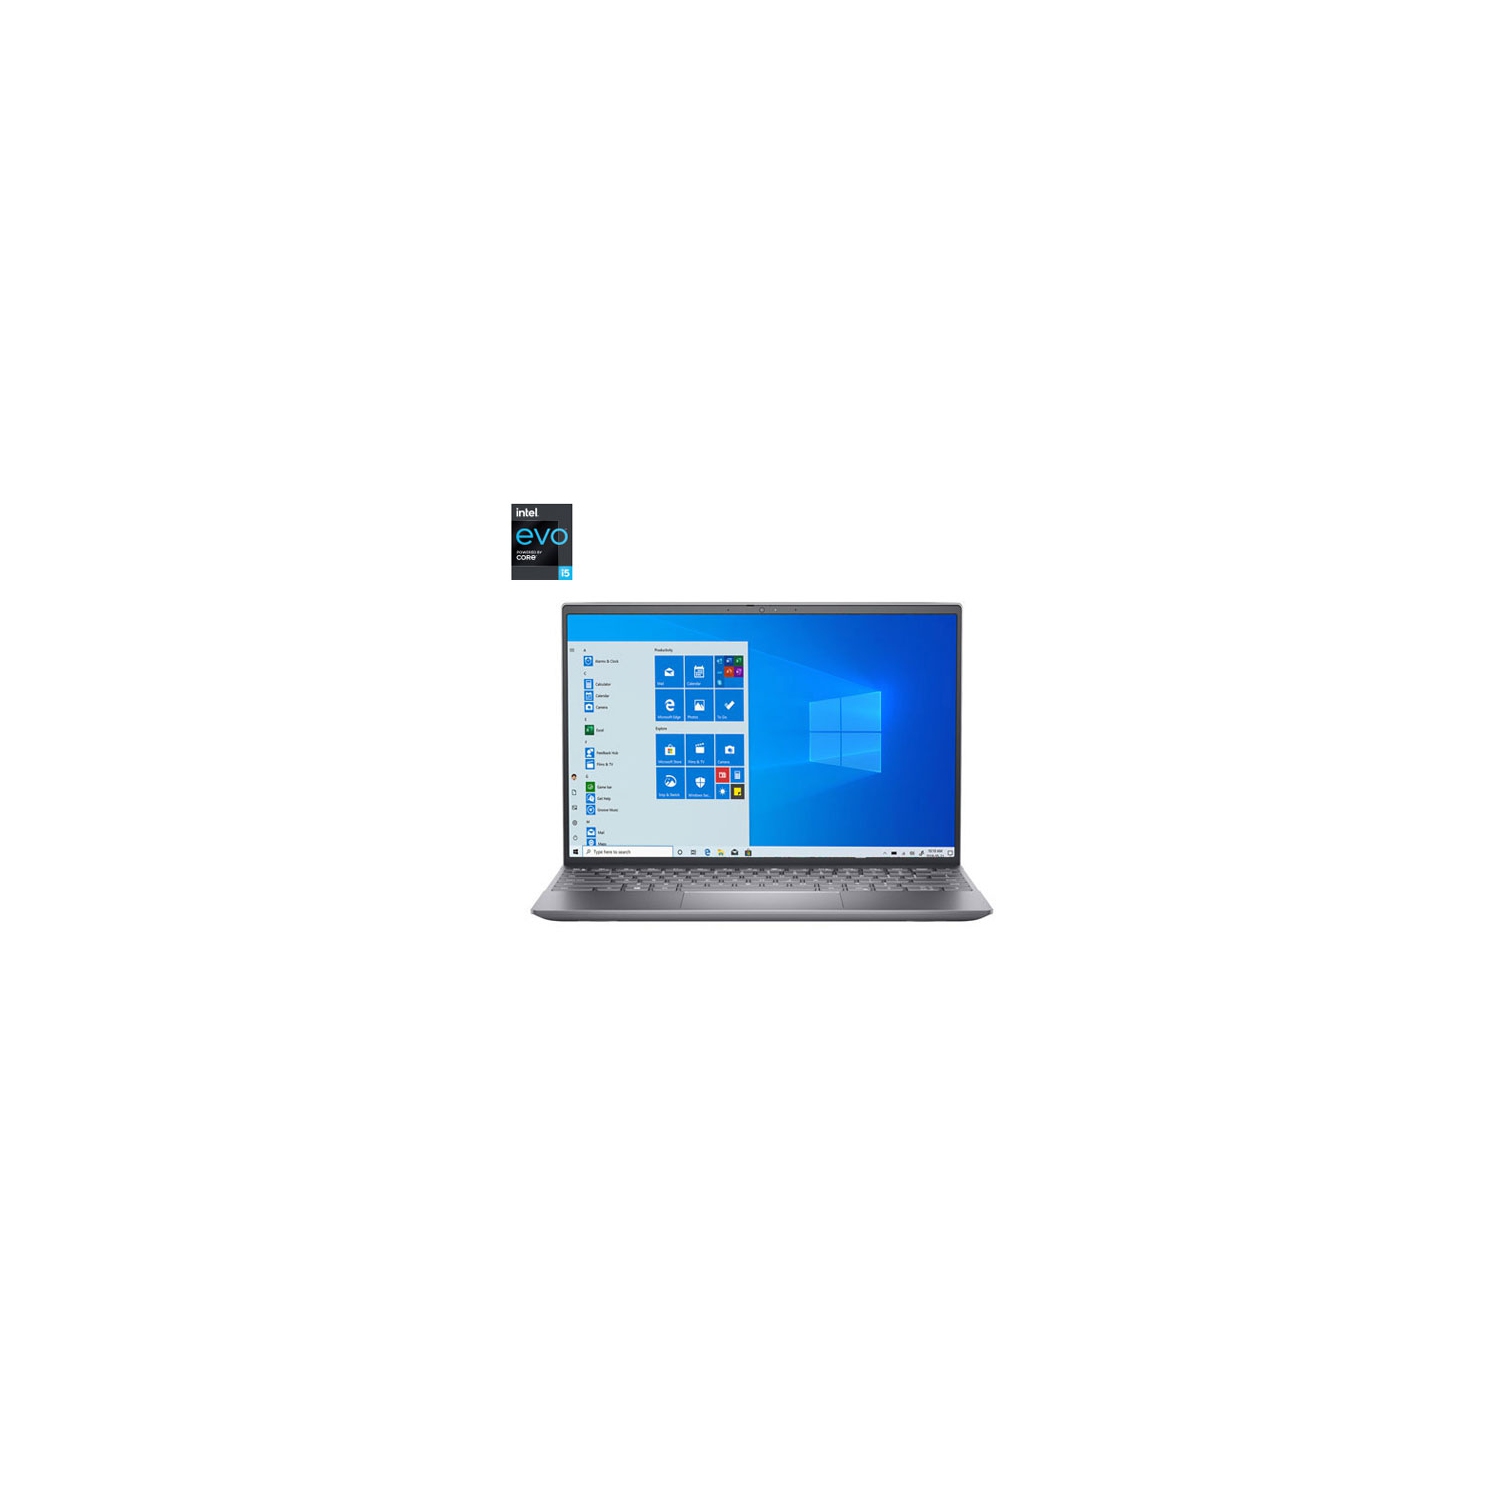 Refurbished (Good) - Dell Inspiron 13 13.3" Laptop - Silver (11th Gen Intel Core i5-11320H/256GB SSD/8GB RAM/Windows 10)